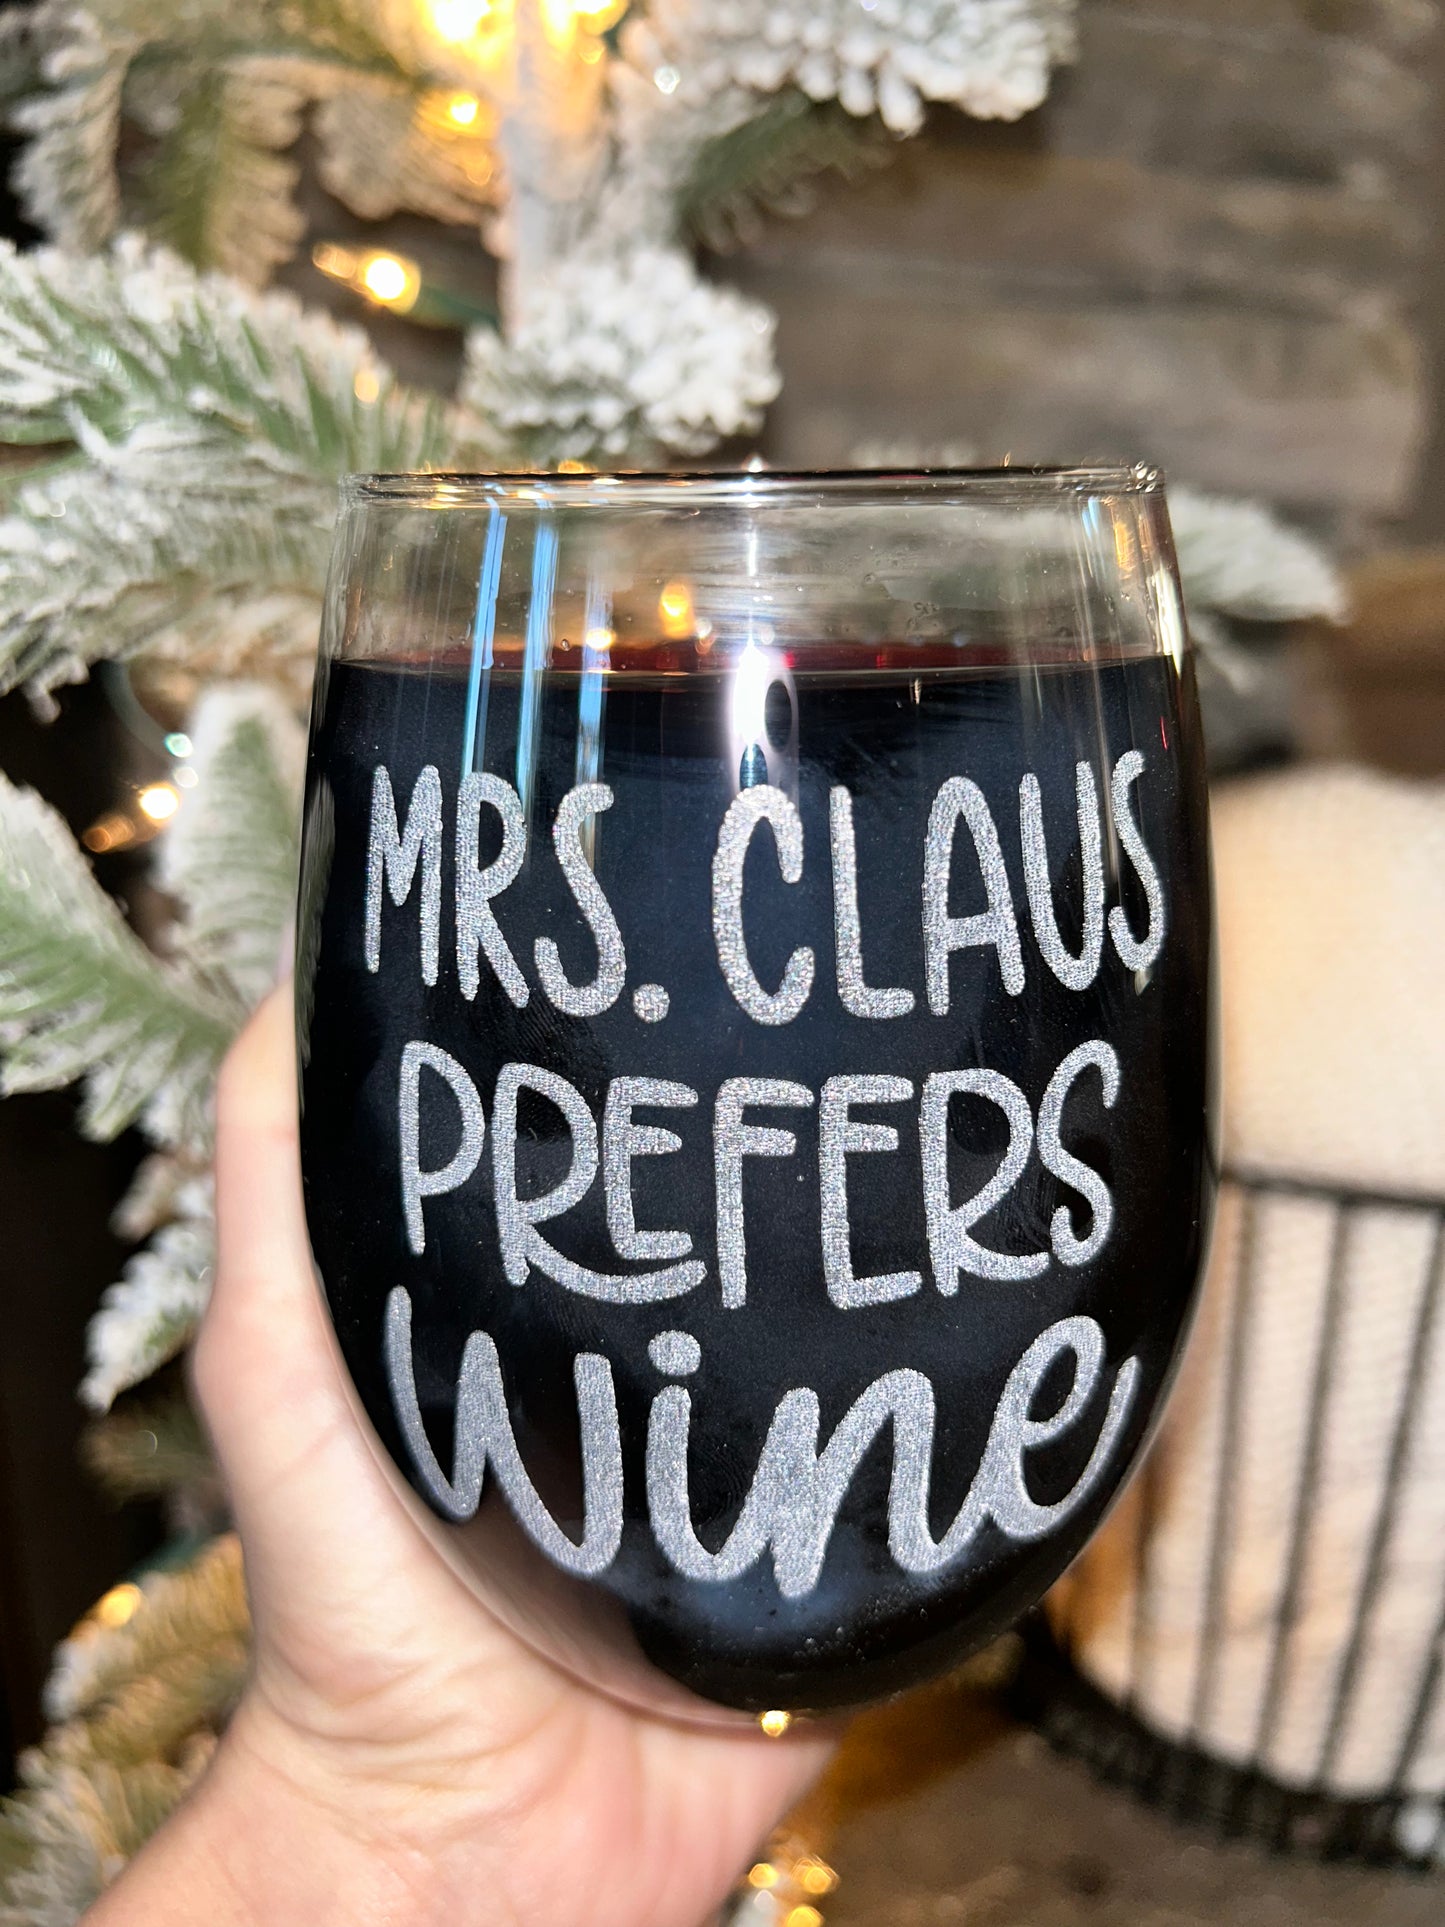 Mrs Claus Wine Glass